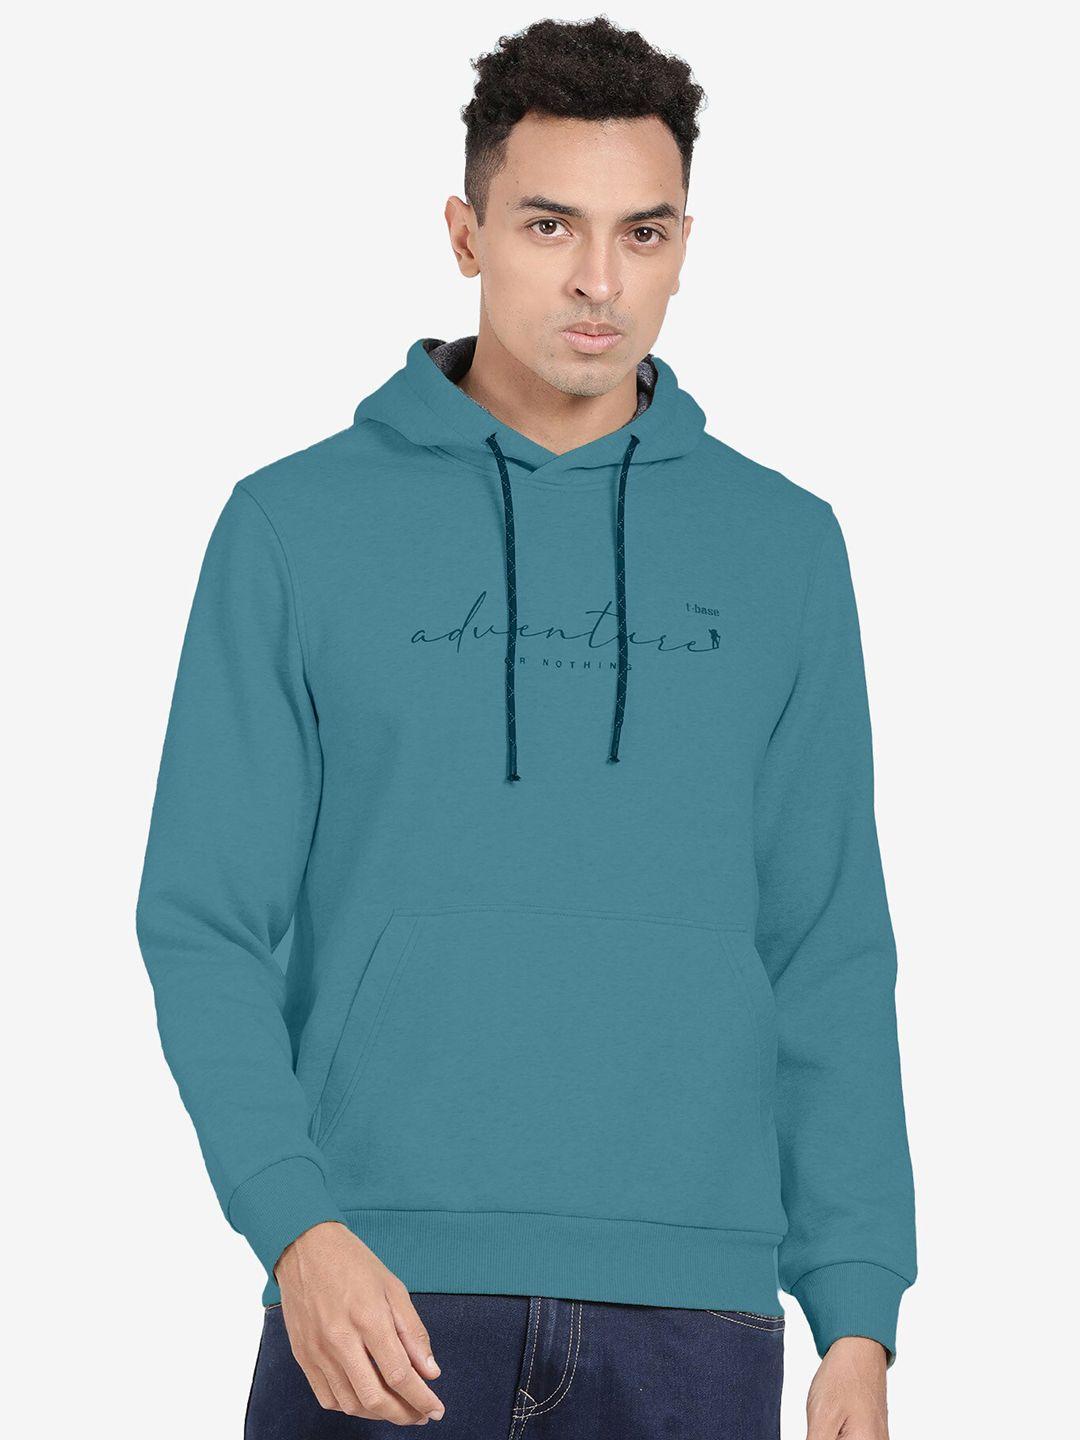 t-base typography printed hooded cotton sweatshirt